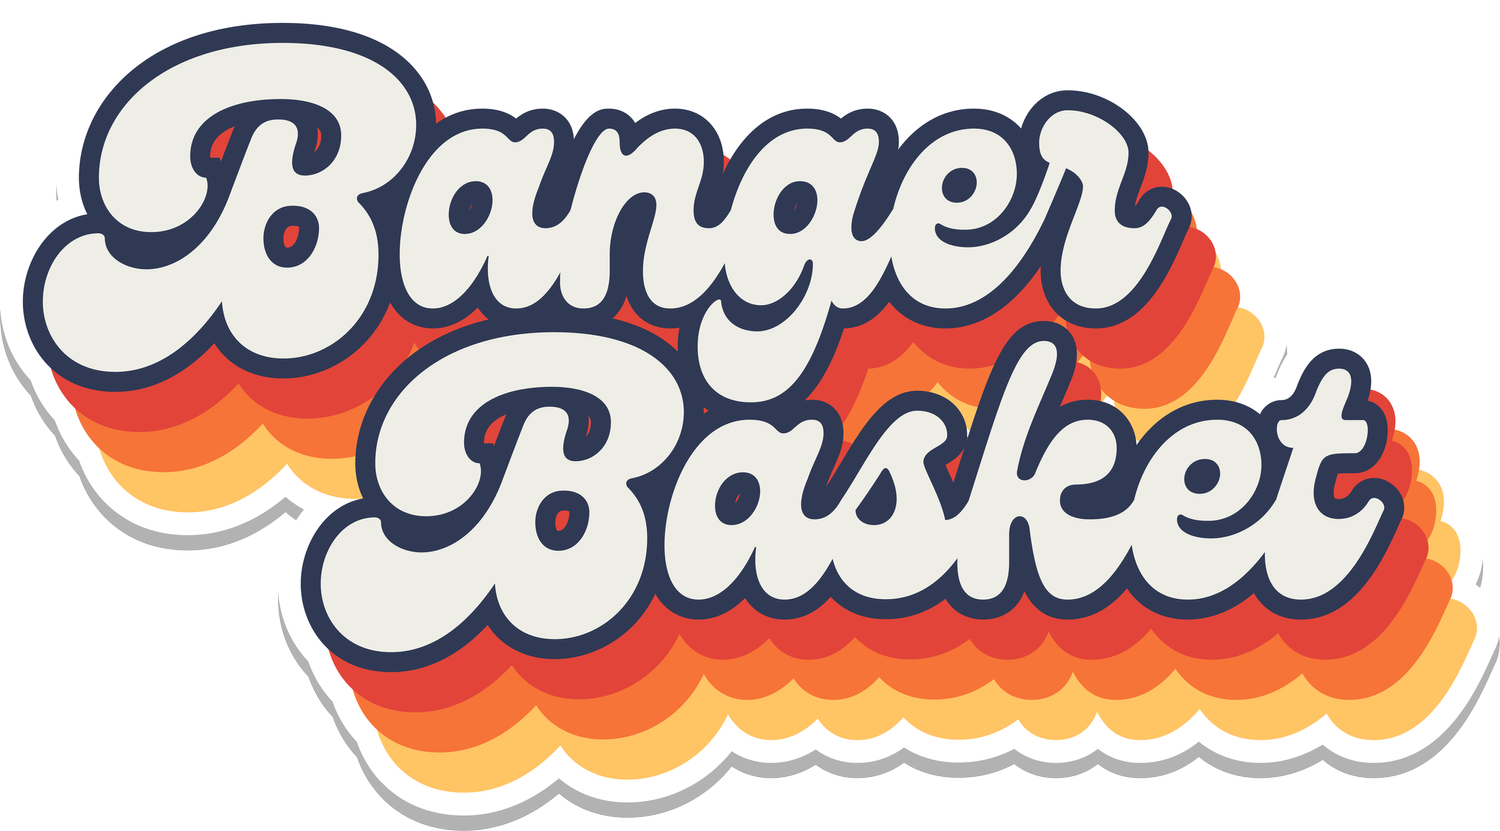 Banger Basket